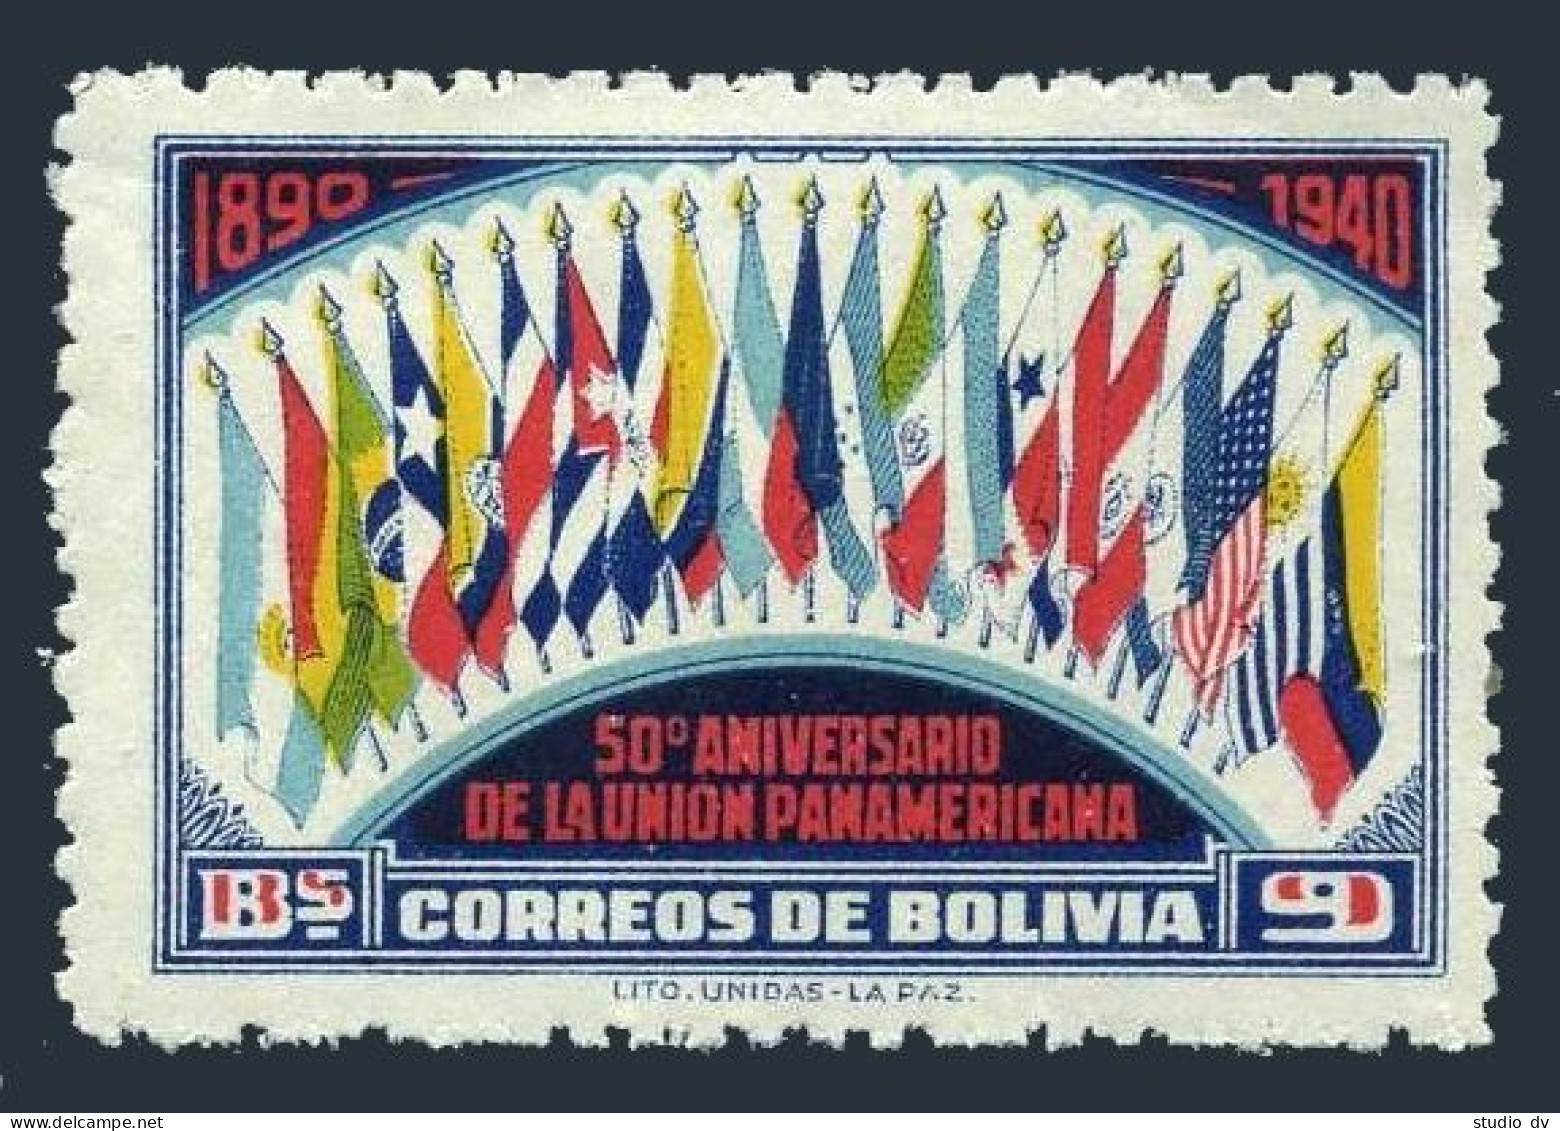 Bolivia 269,MNH.Michel 320. Pan American Union,50th Ann.1940.Flags. - Bolivia